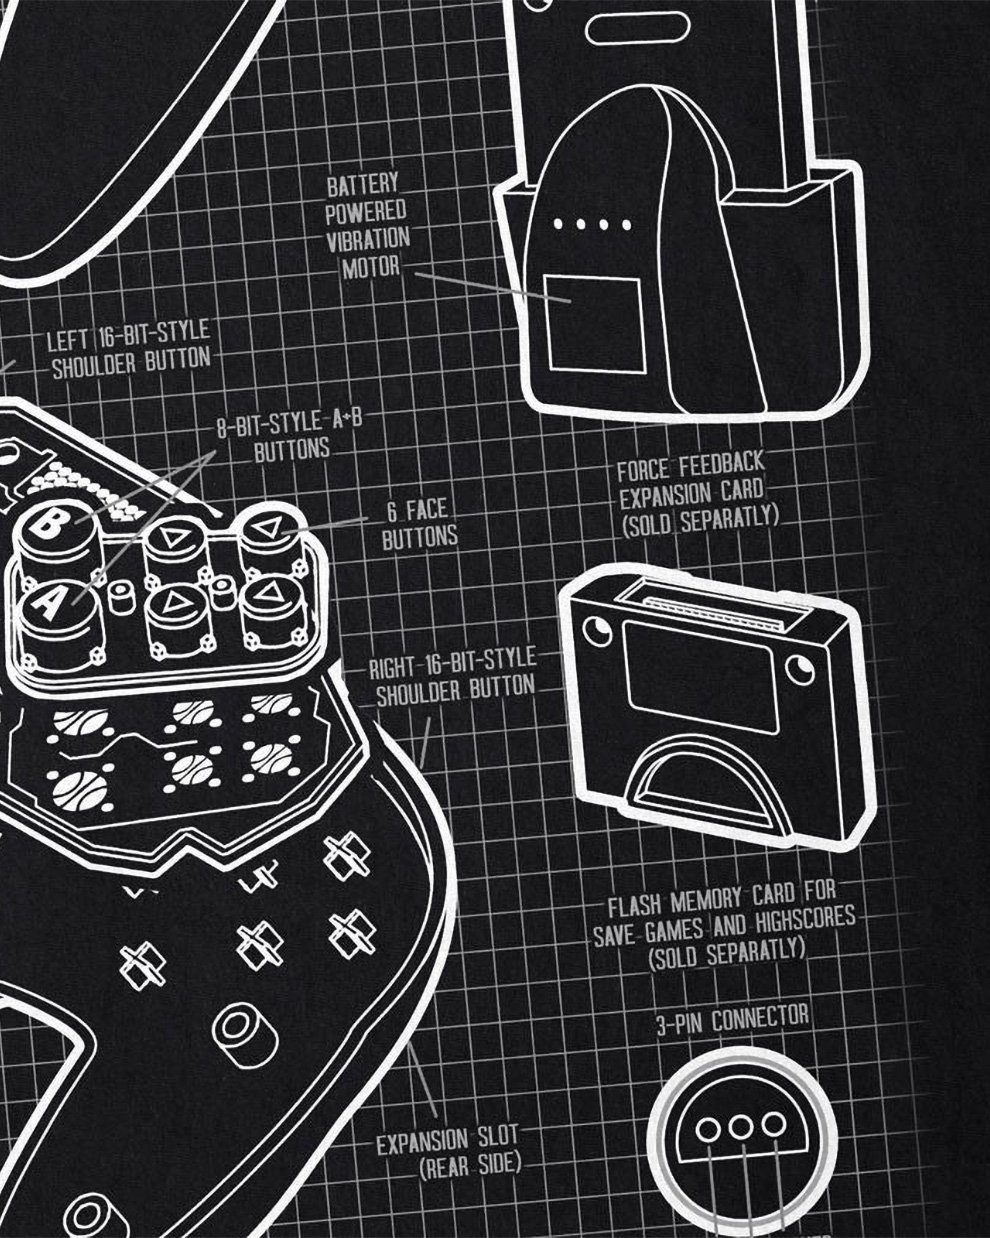 style3 Print-Shirt Herren T-Shirt N64 controller classic nes nintendo schwarz kart gamer Blaupause 64 mario